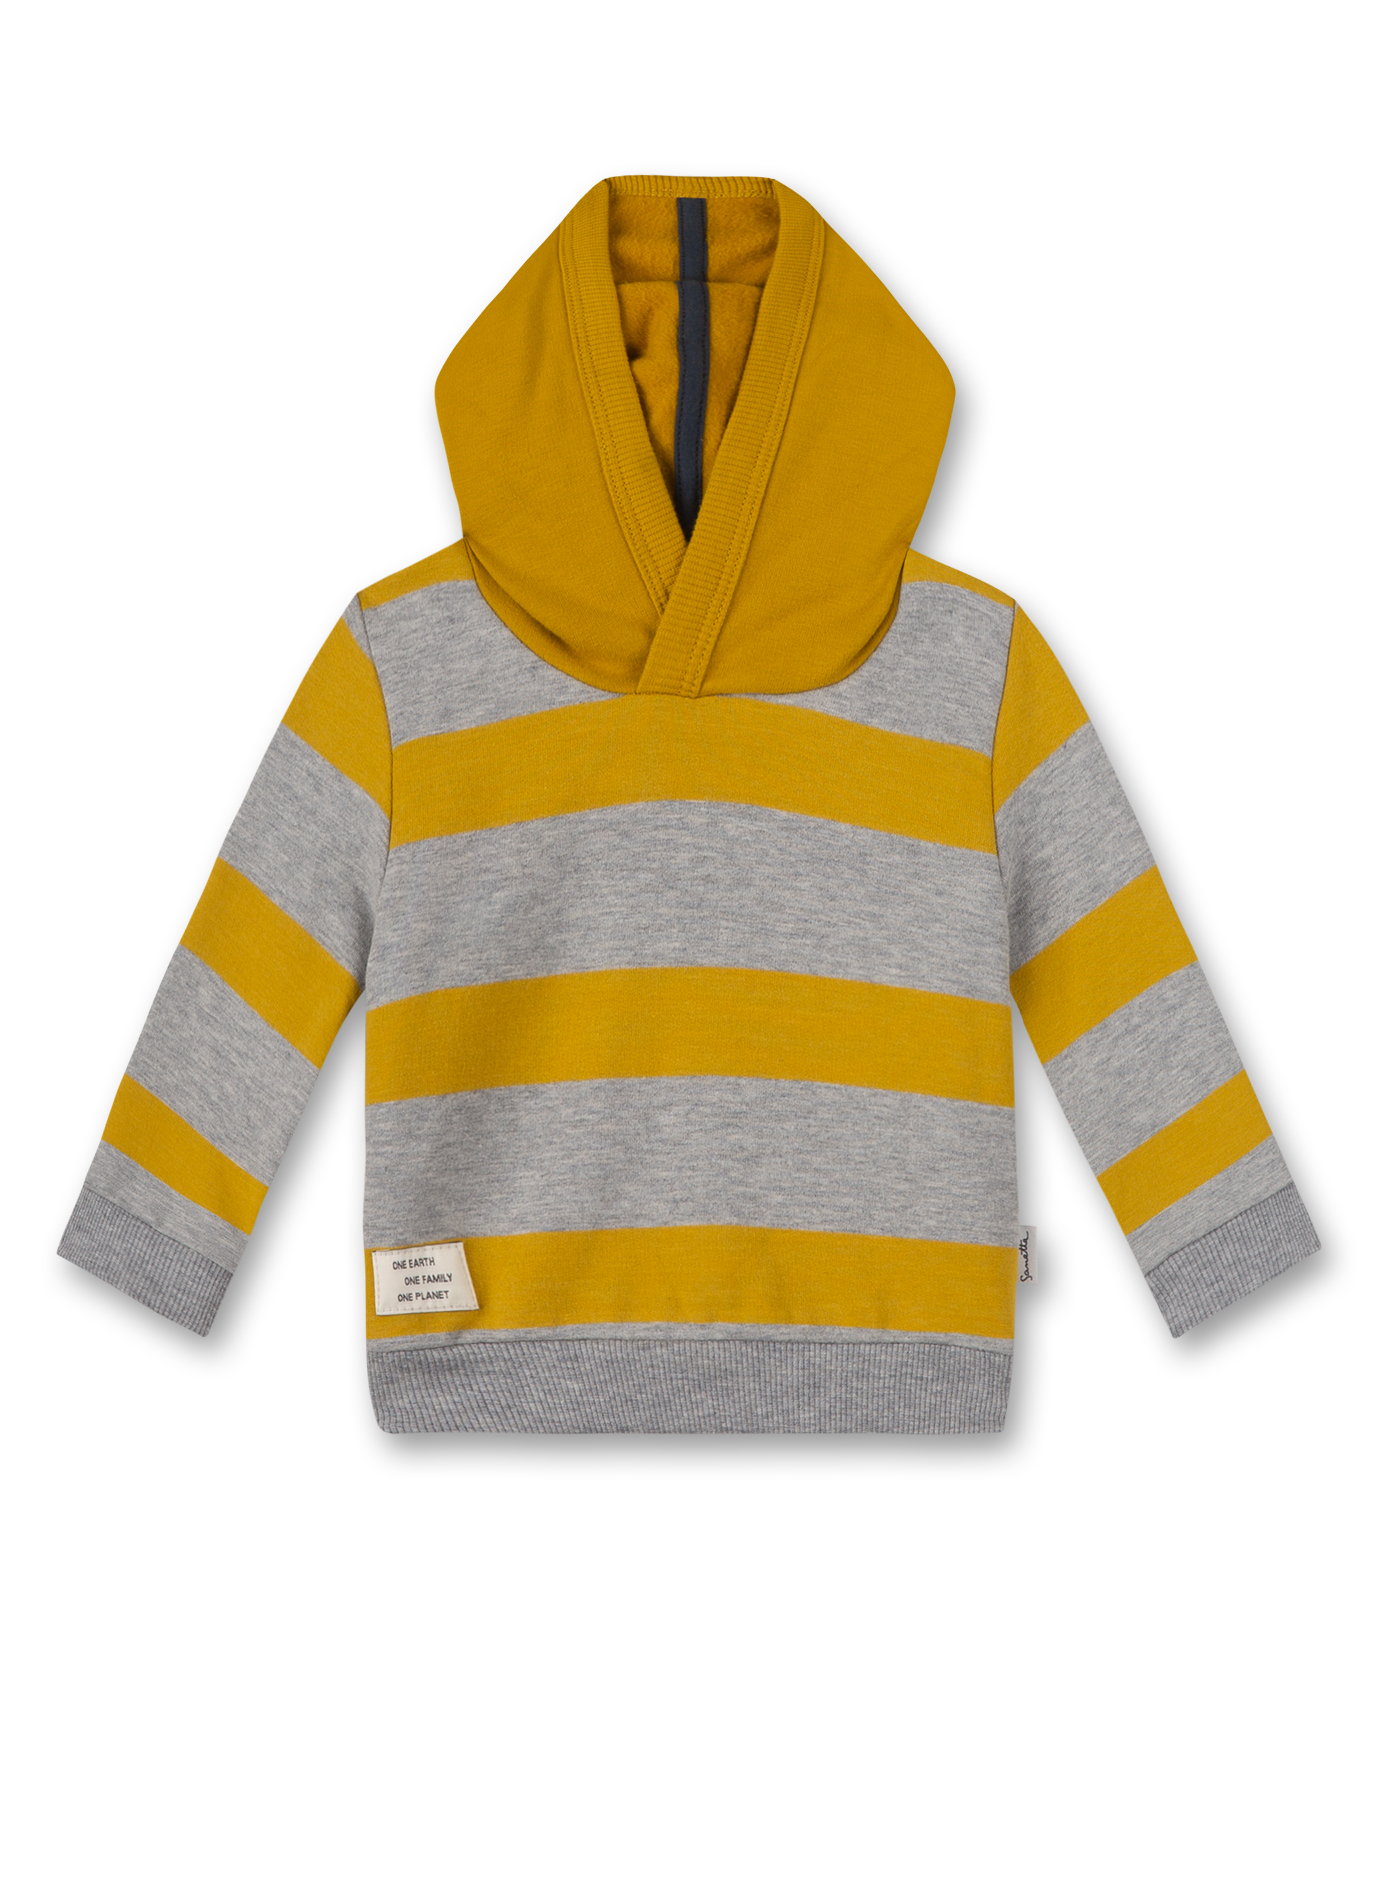 Jungen-Sweatshirt Gelb geringelt Turtle